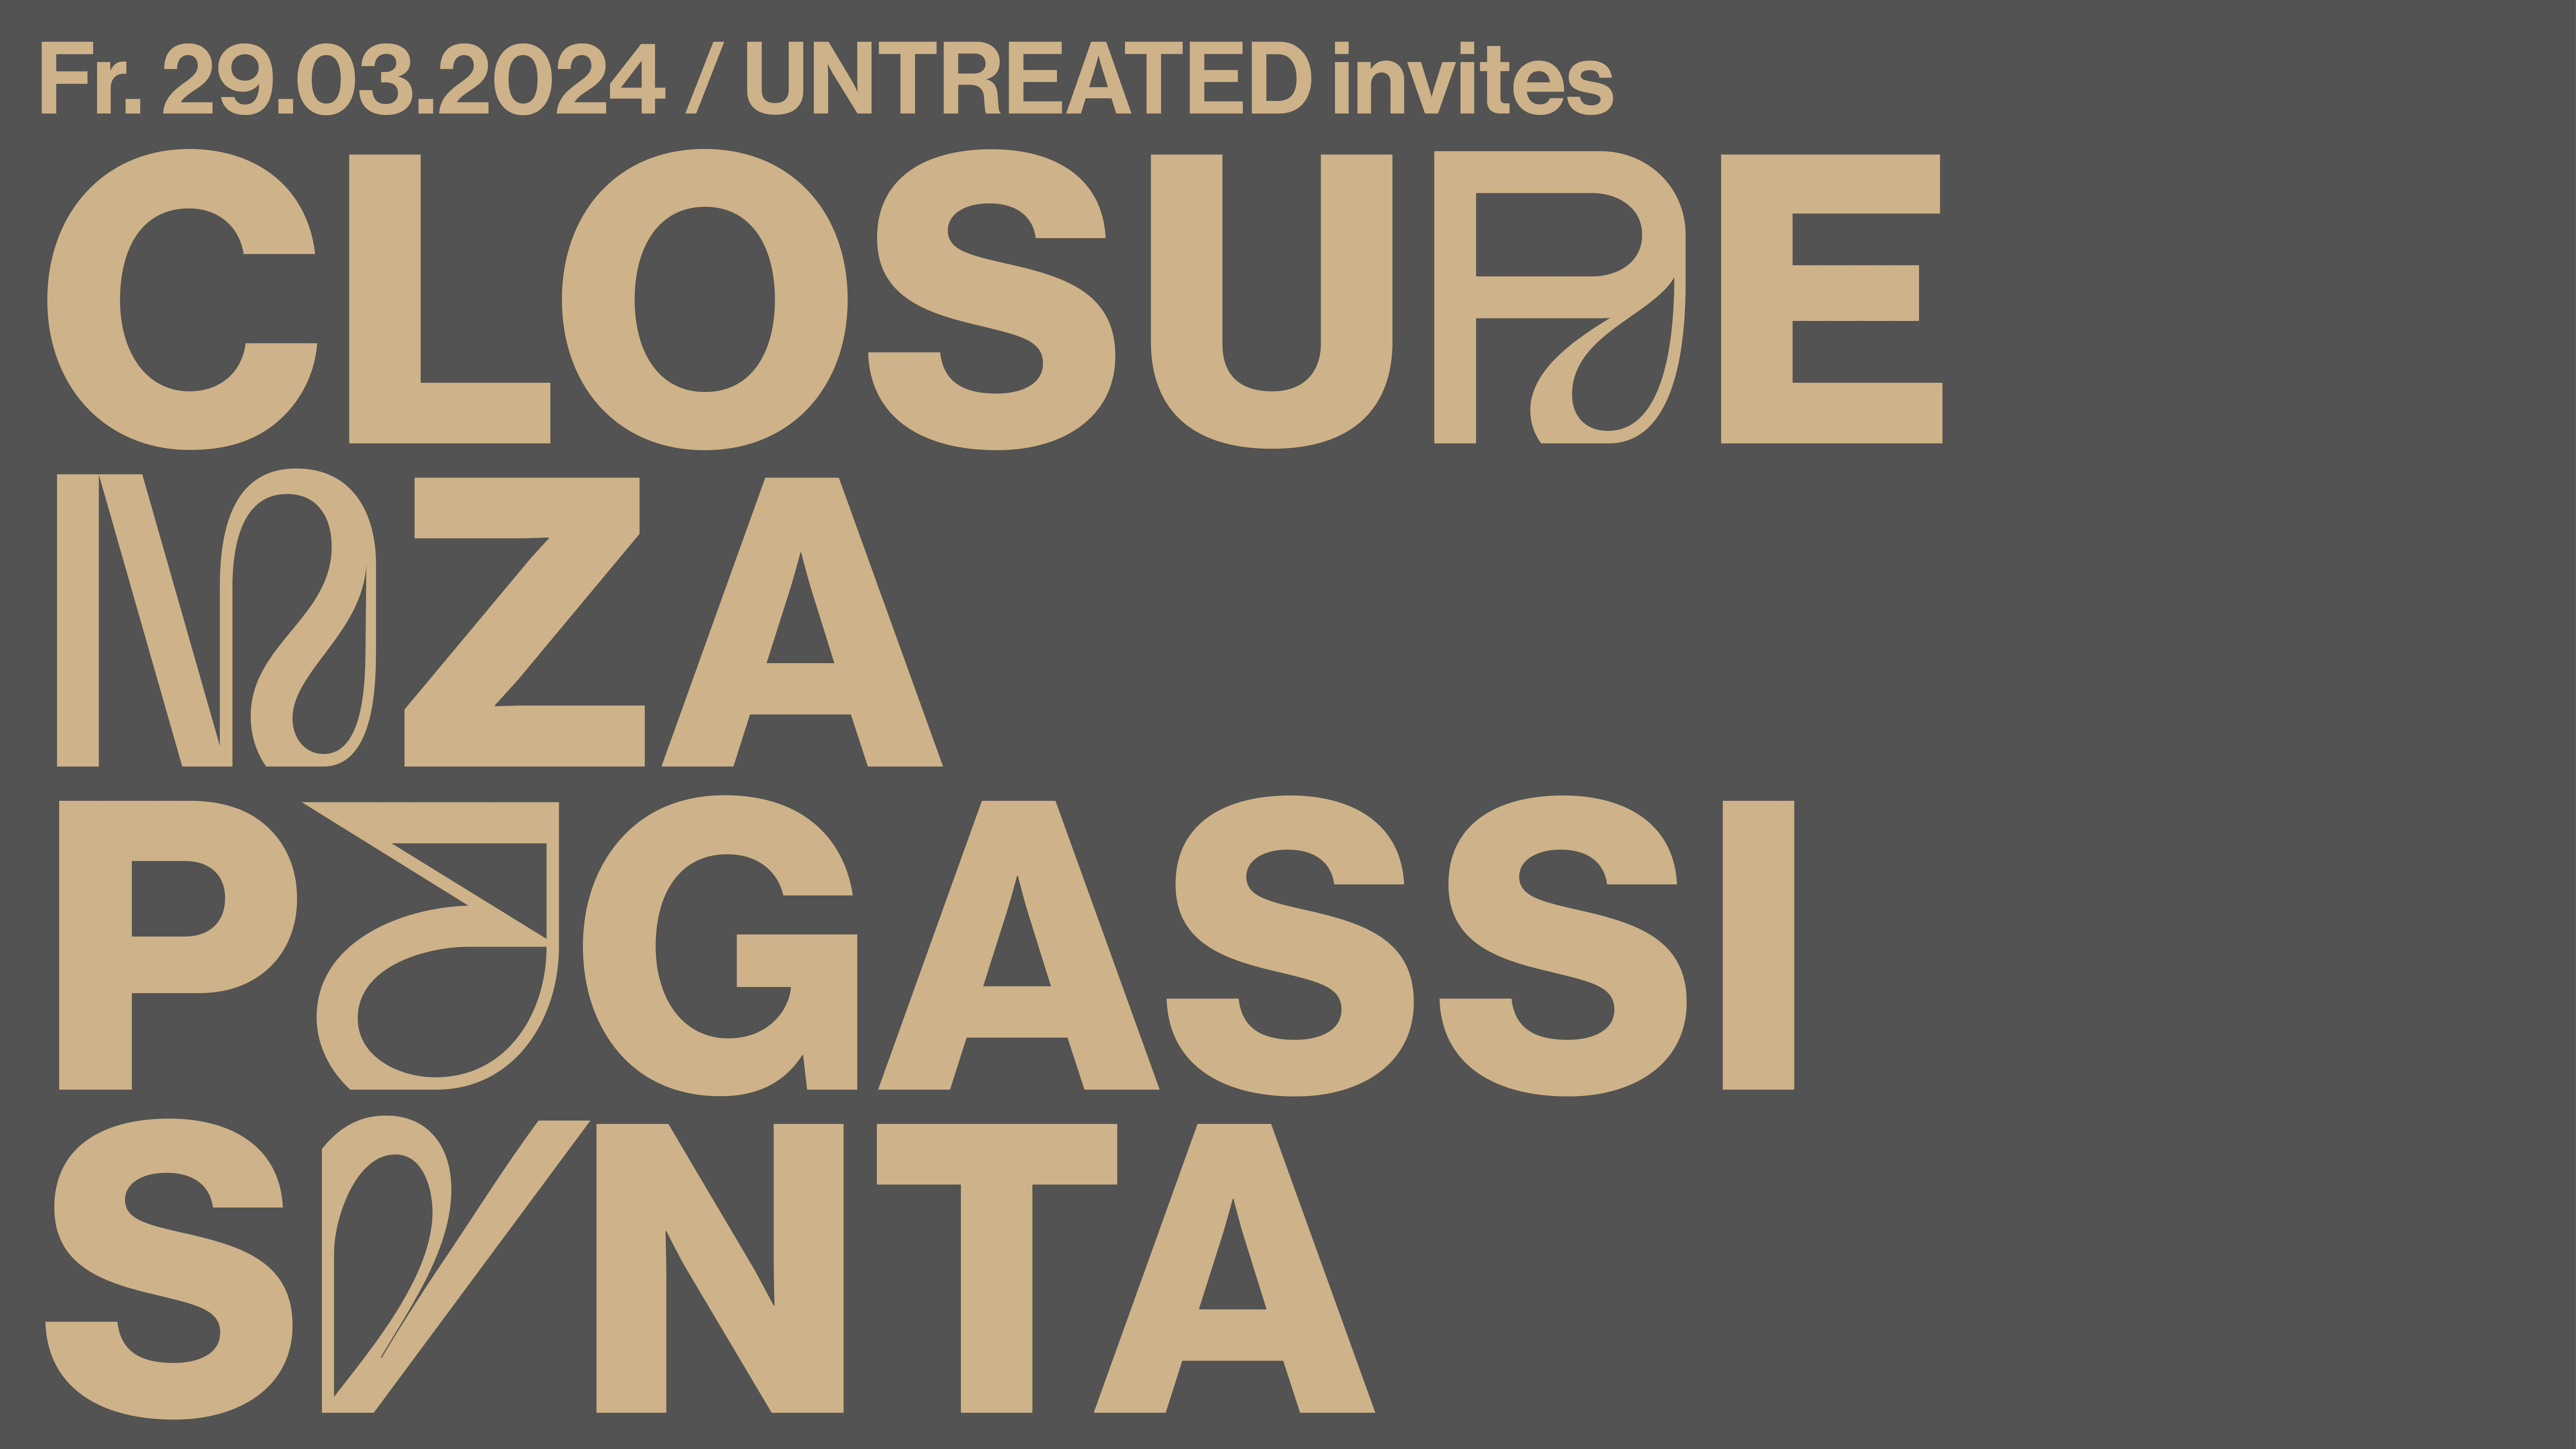 UNTREATED invites CLOSURE, MZA, Pegassi & SYNTA - Página frontal